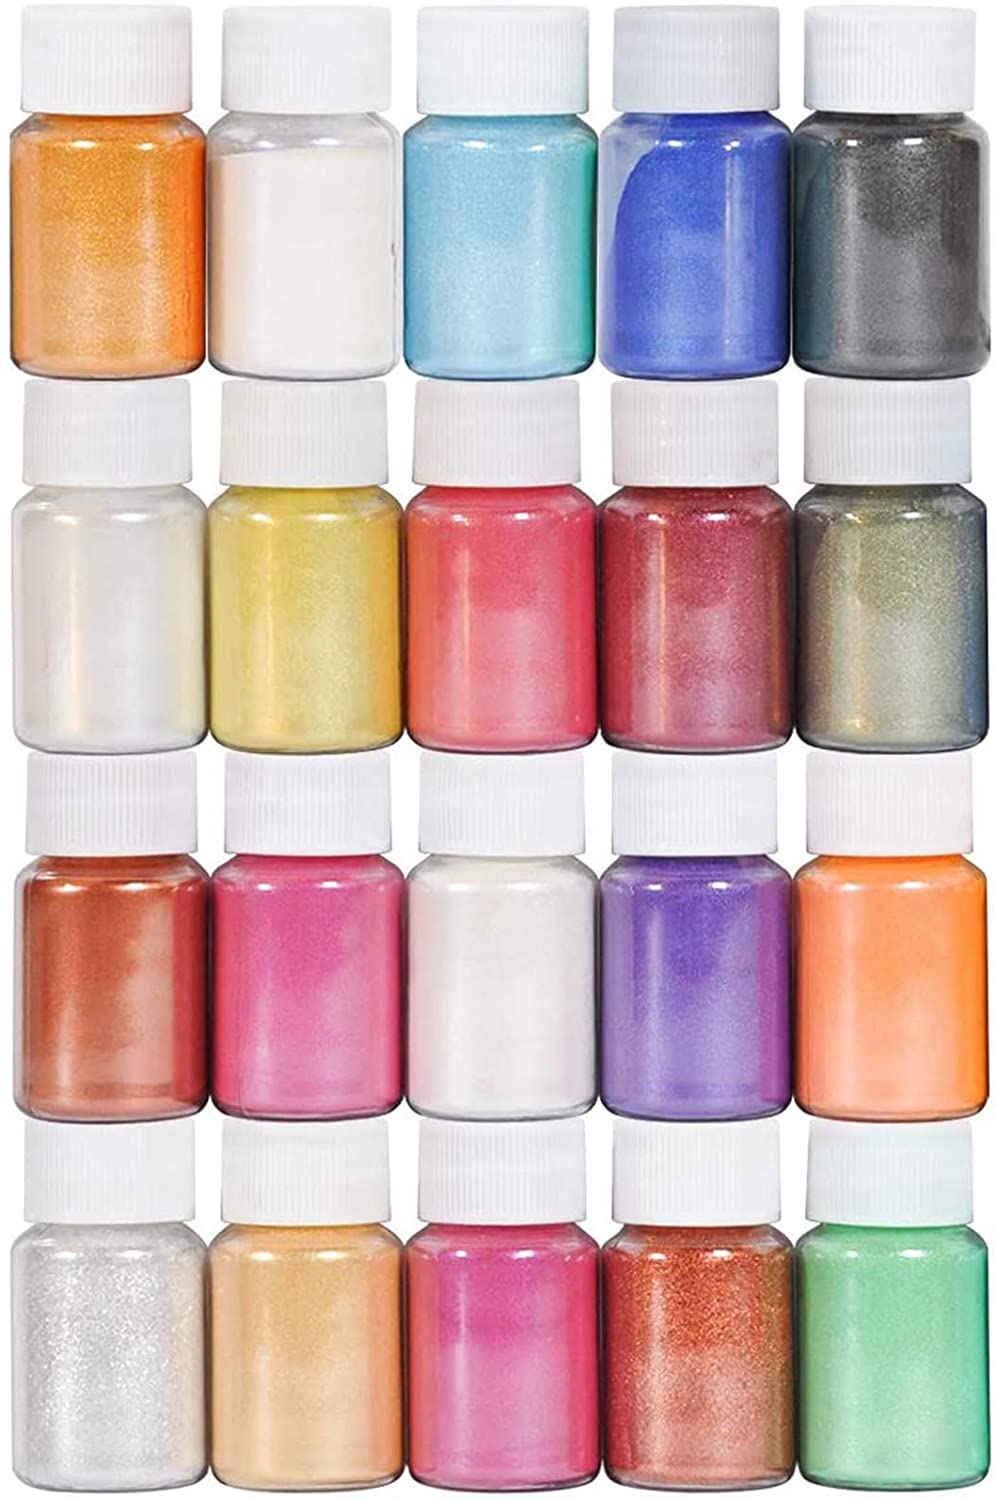 Pigmentos en polvo de mica para resina epoxi Efecto perla 245g Paquete de  24 colores Artesanía epoxi -  España